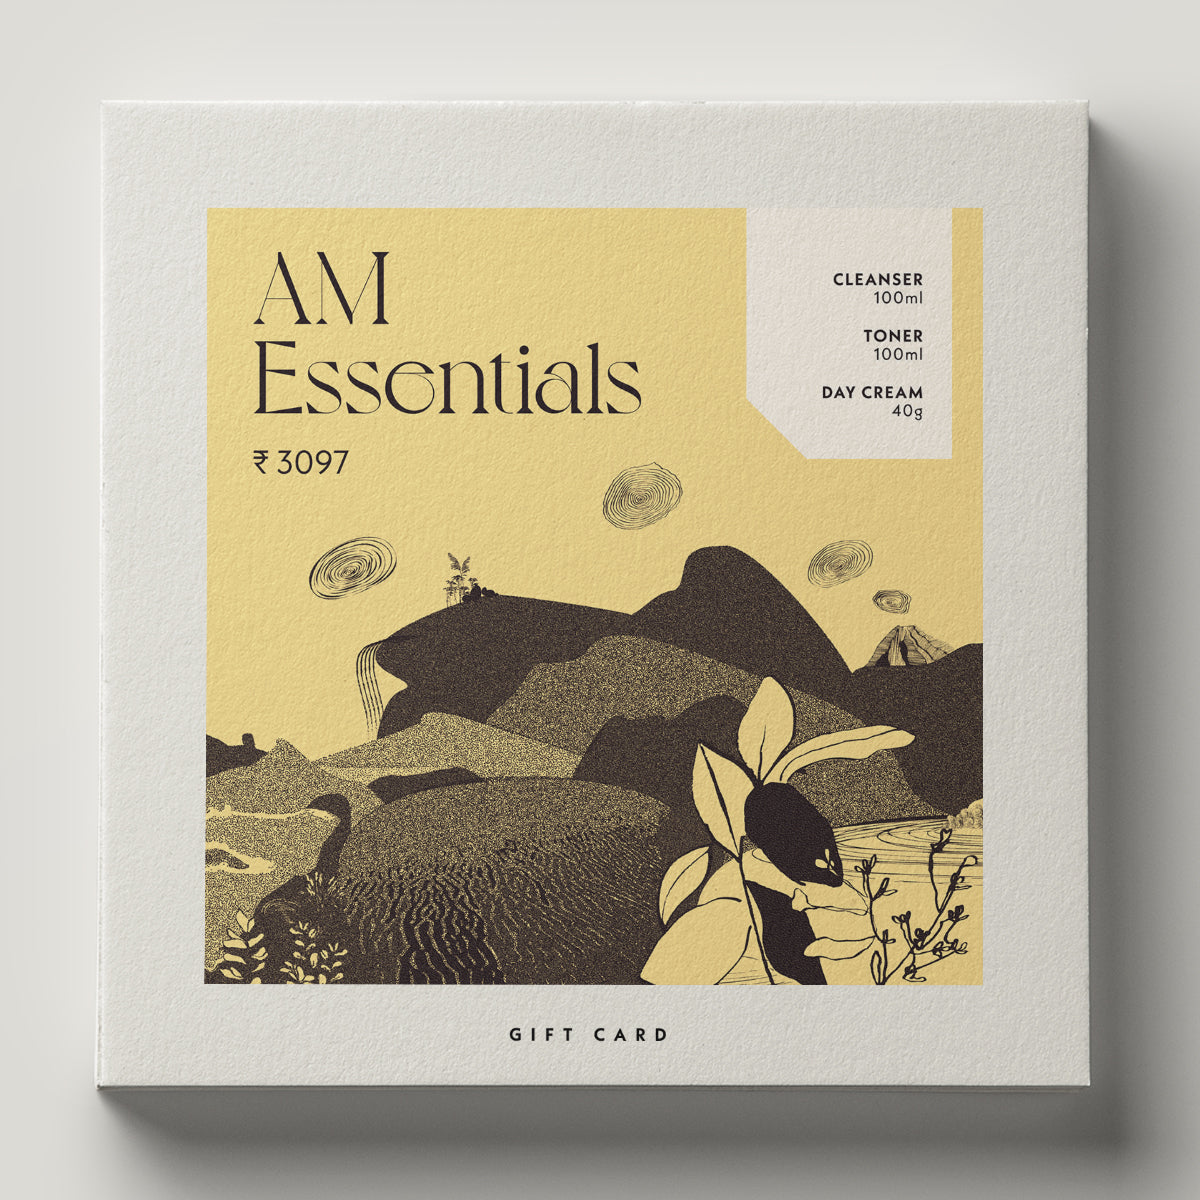 AM Essentials